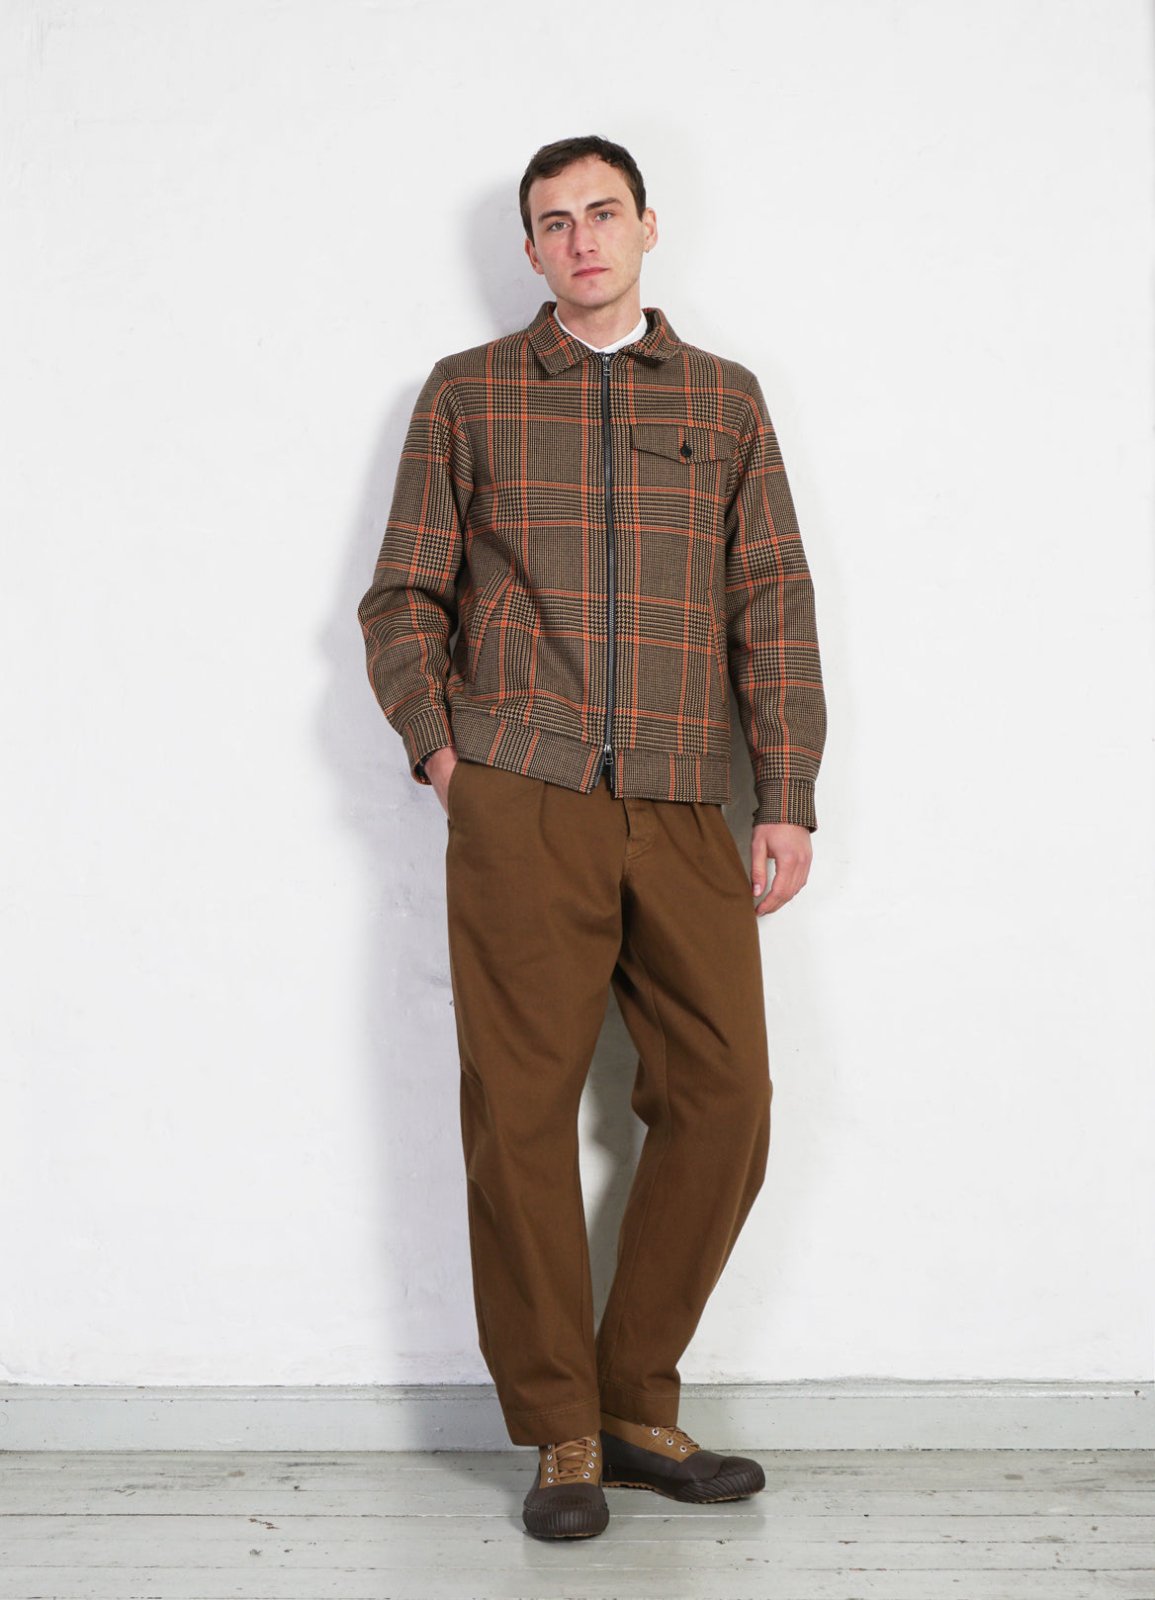 HANSEN GARMENTS - JARLE | Casual Zipper Jacket | Orange Glen Check - HANSEN Garments